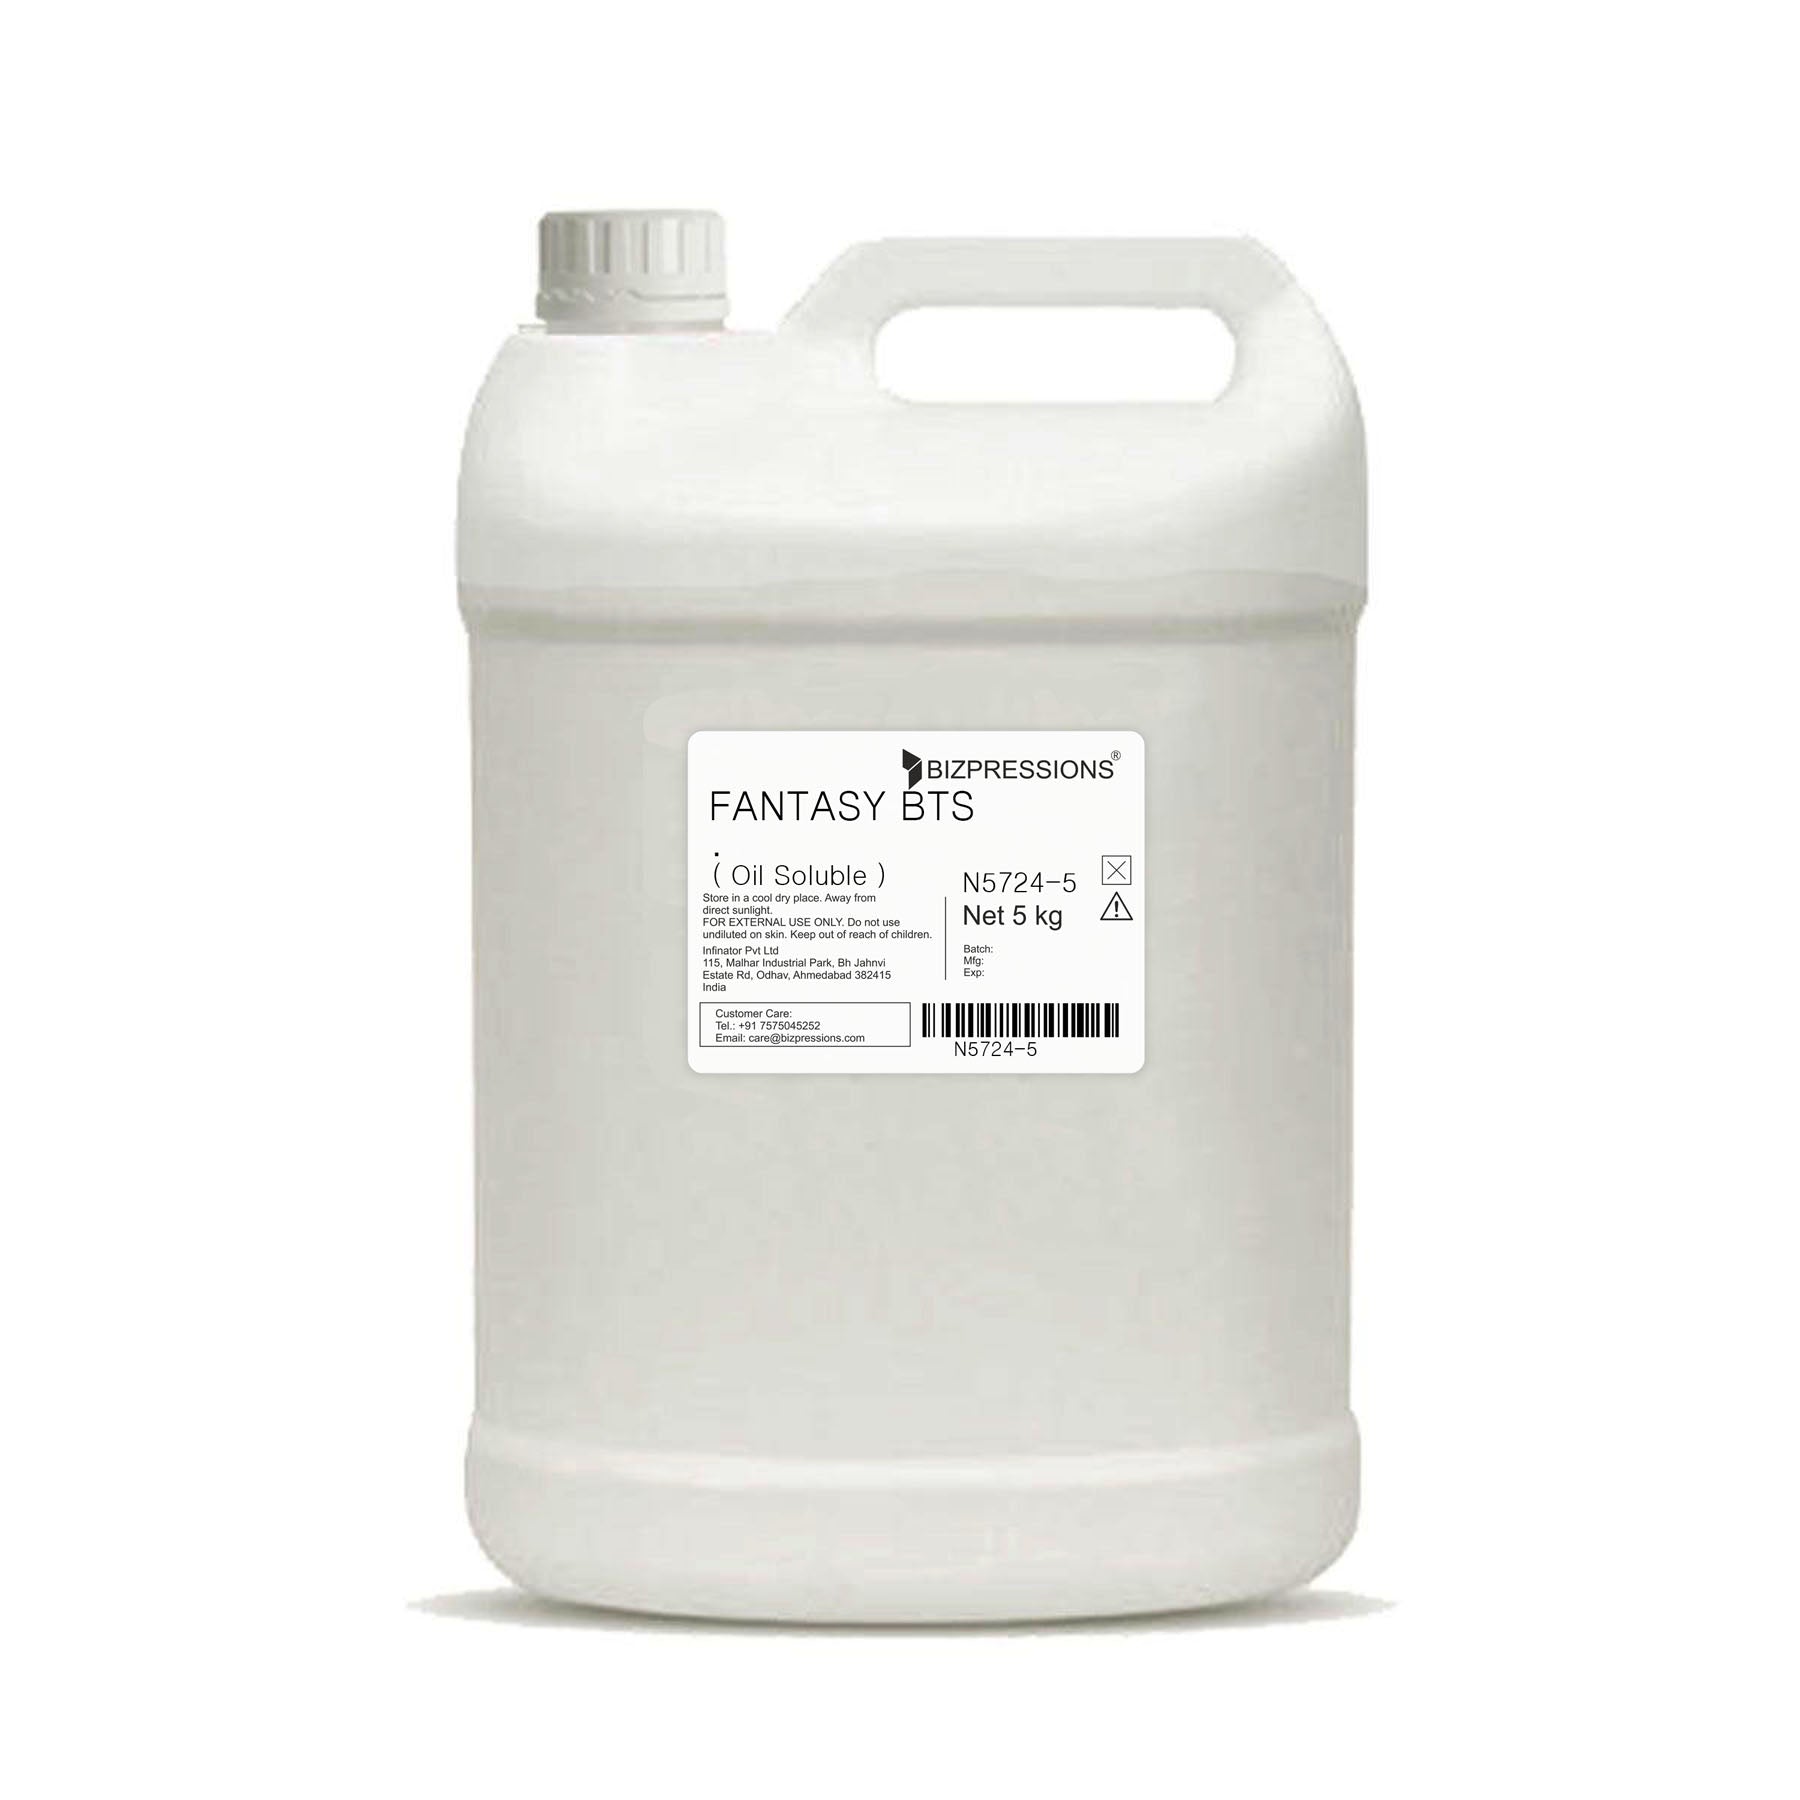 FANTASY BTS - Fragrance ( Oil Soluble ) - 5 kg